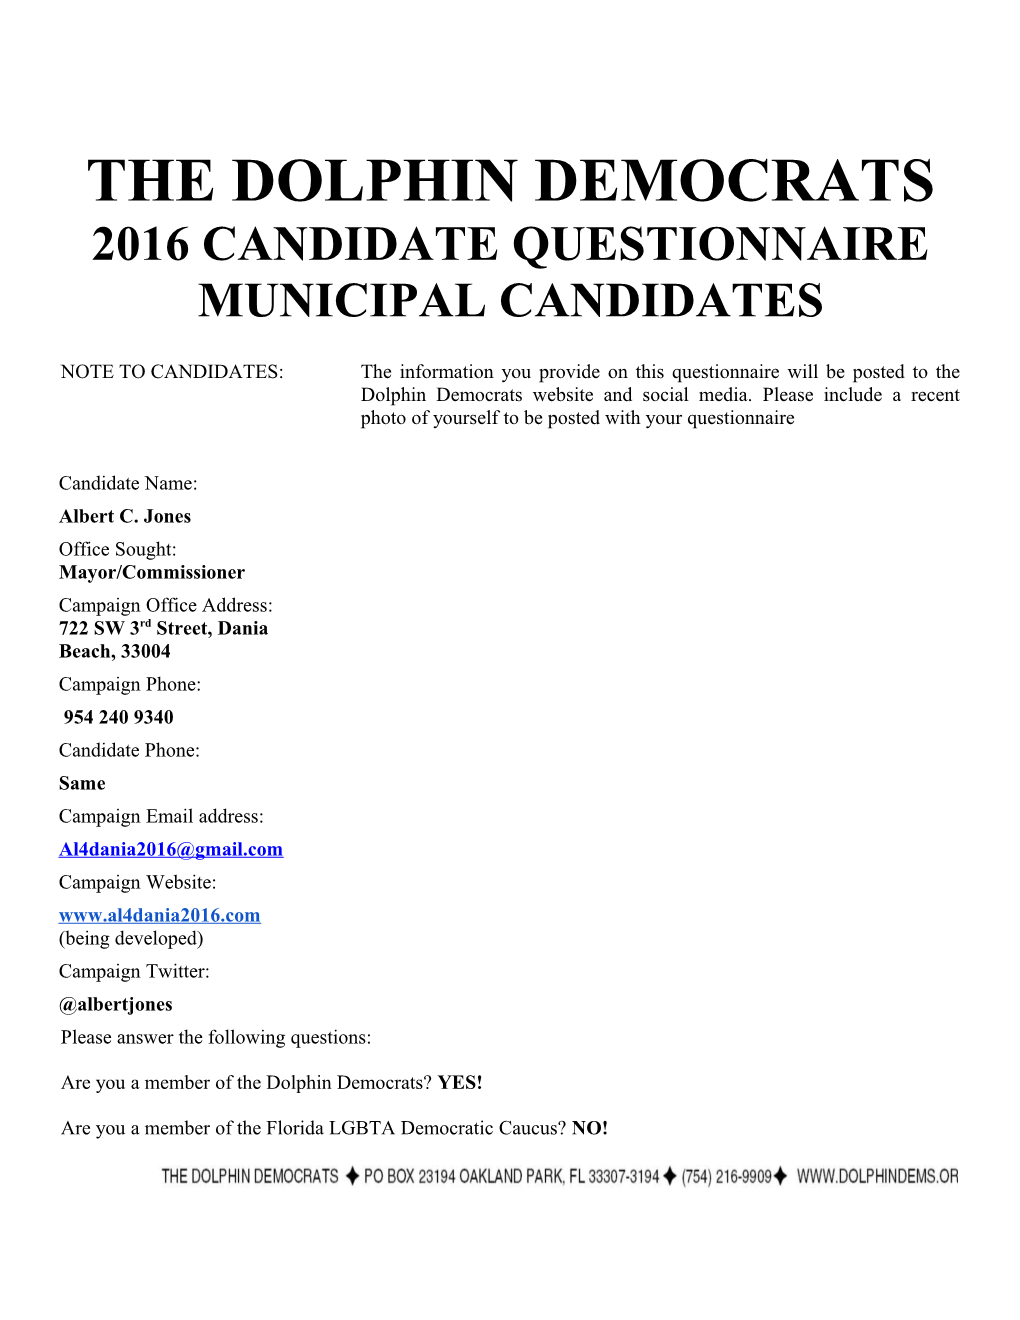 The Dolphin Democrats